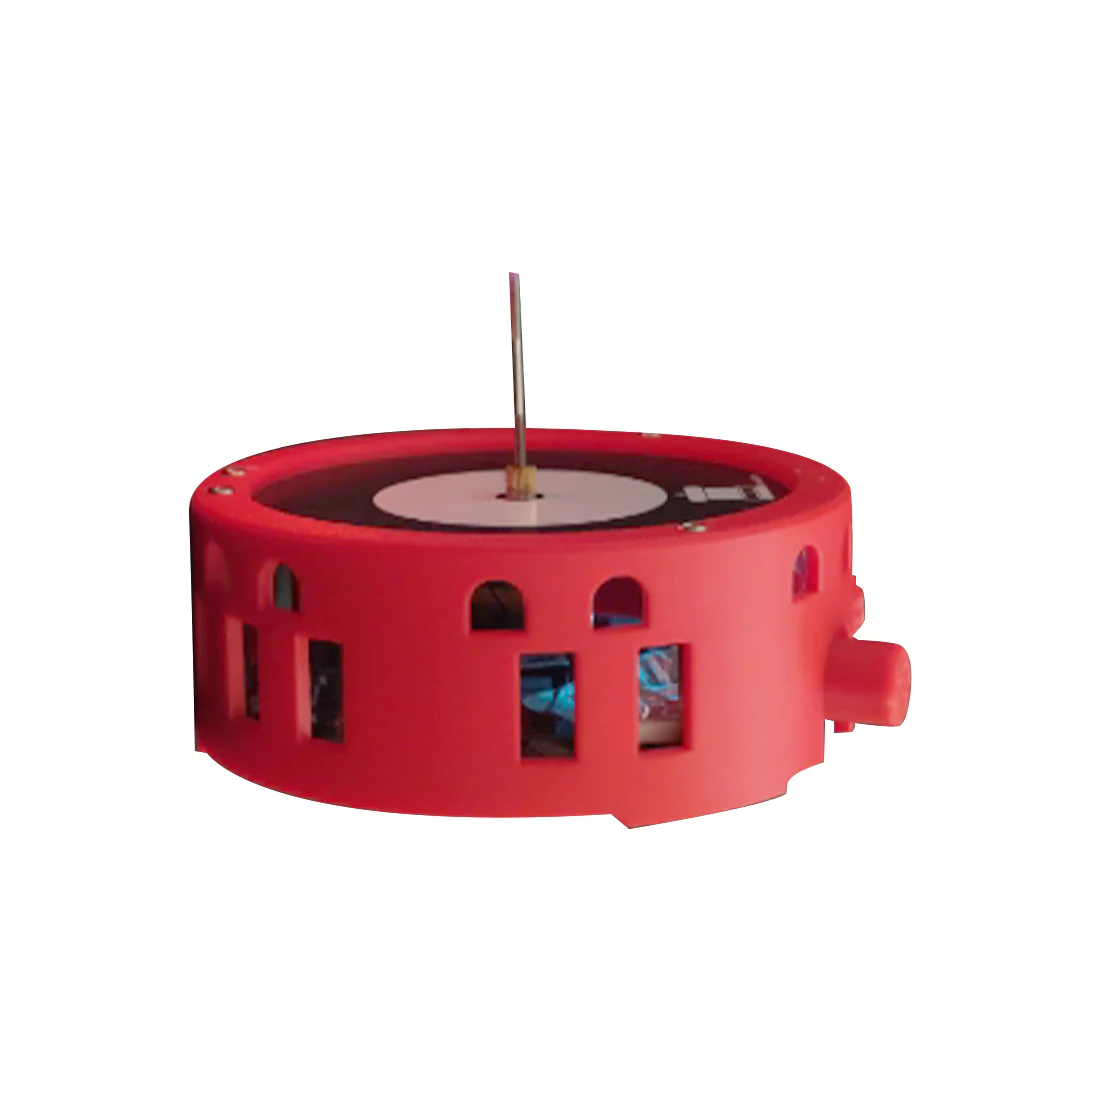 Bluetooth Mini SSTC Tesla Coil Musical Artificial Lightning -Red&Black (US Plug and EU Plug) 2